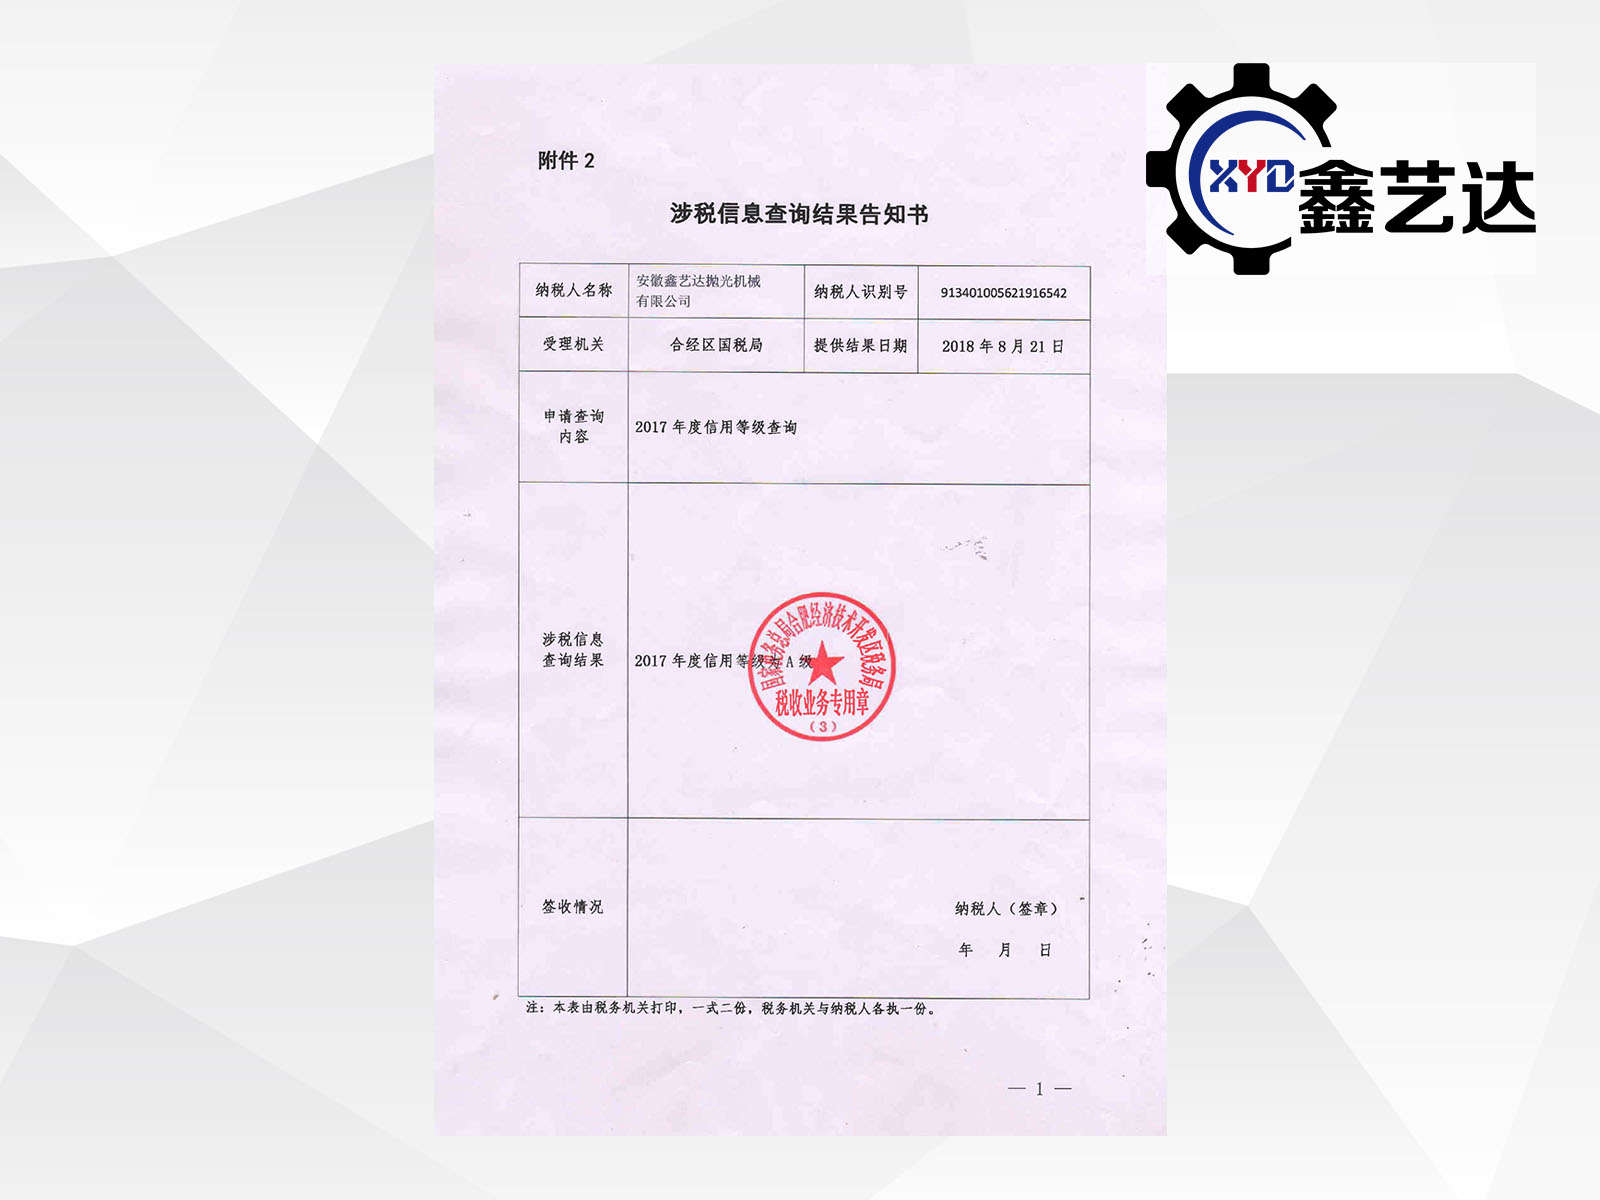 Anhui Xinyida Polishing Machinery Co., Ltd. won the title of 2017 tax credit rating A-level enterpris